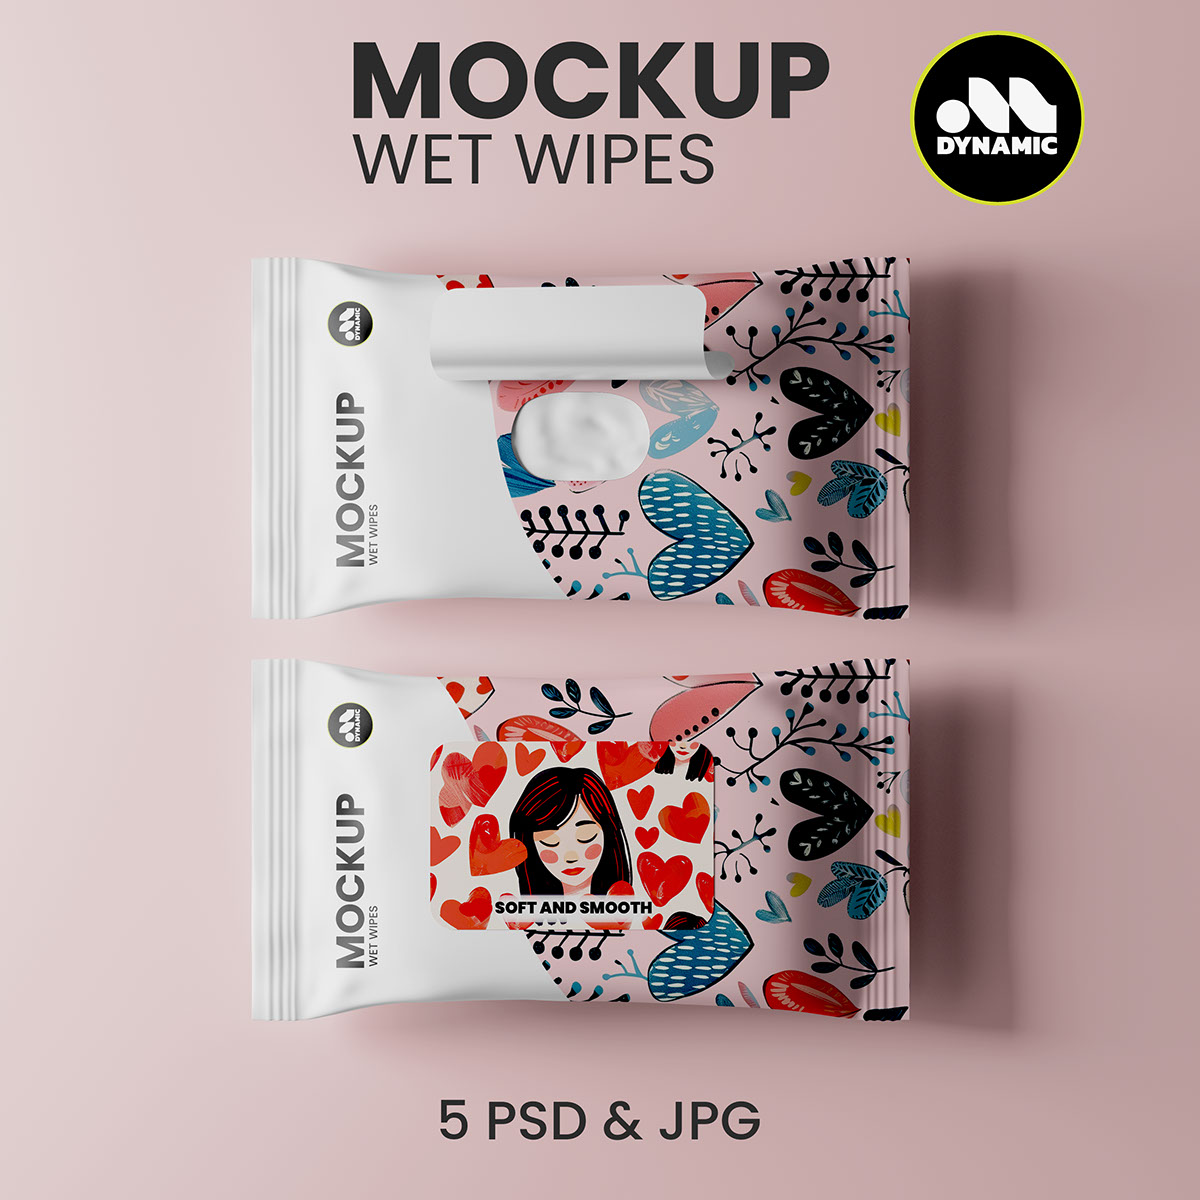 Wet wipes Mockup Photoshop rendition image